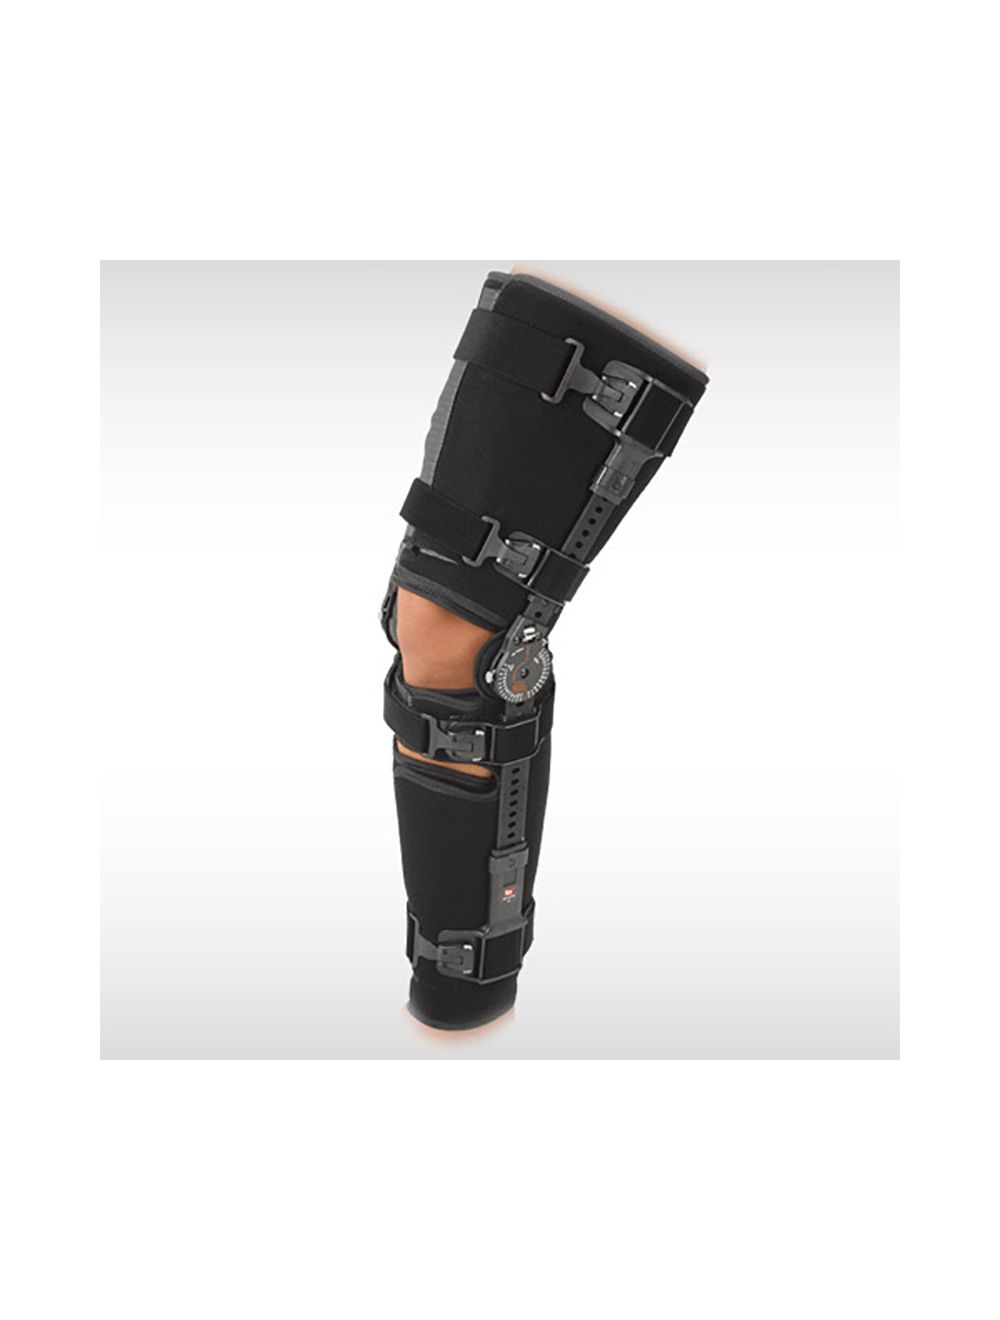 https://www.usawheelchair.com/pub/media/catalog/product/cache/ddb236bdd69ff7cc1401d94c525e1745/k/n/knee-bracing-breg-g3-post-op-knee-brace-2.jpg